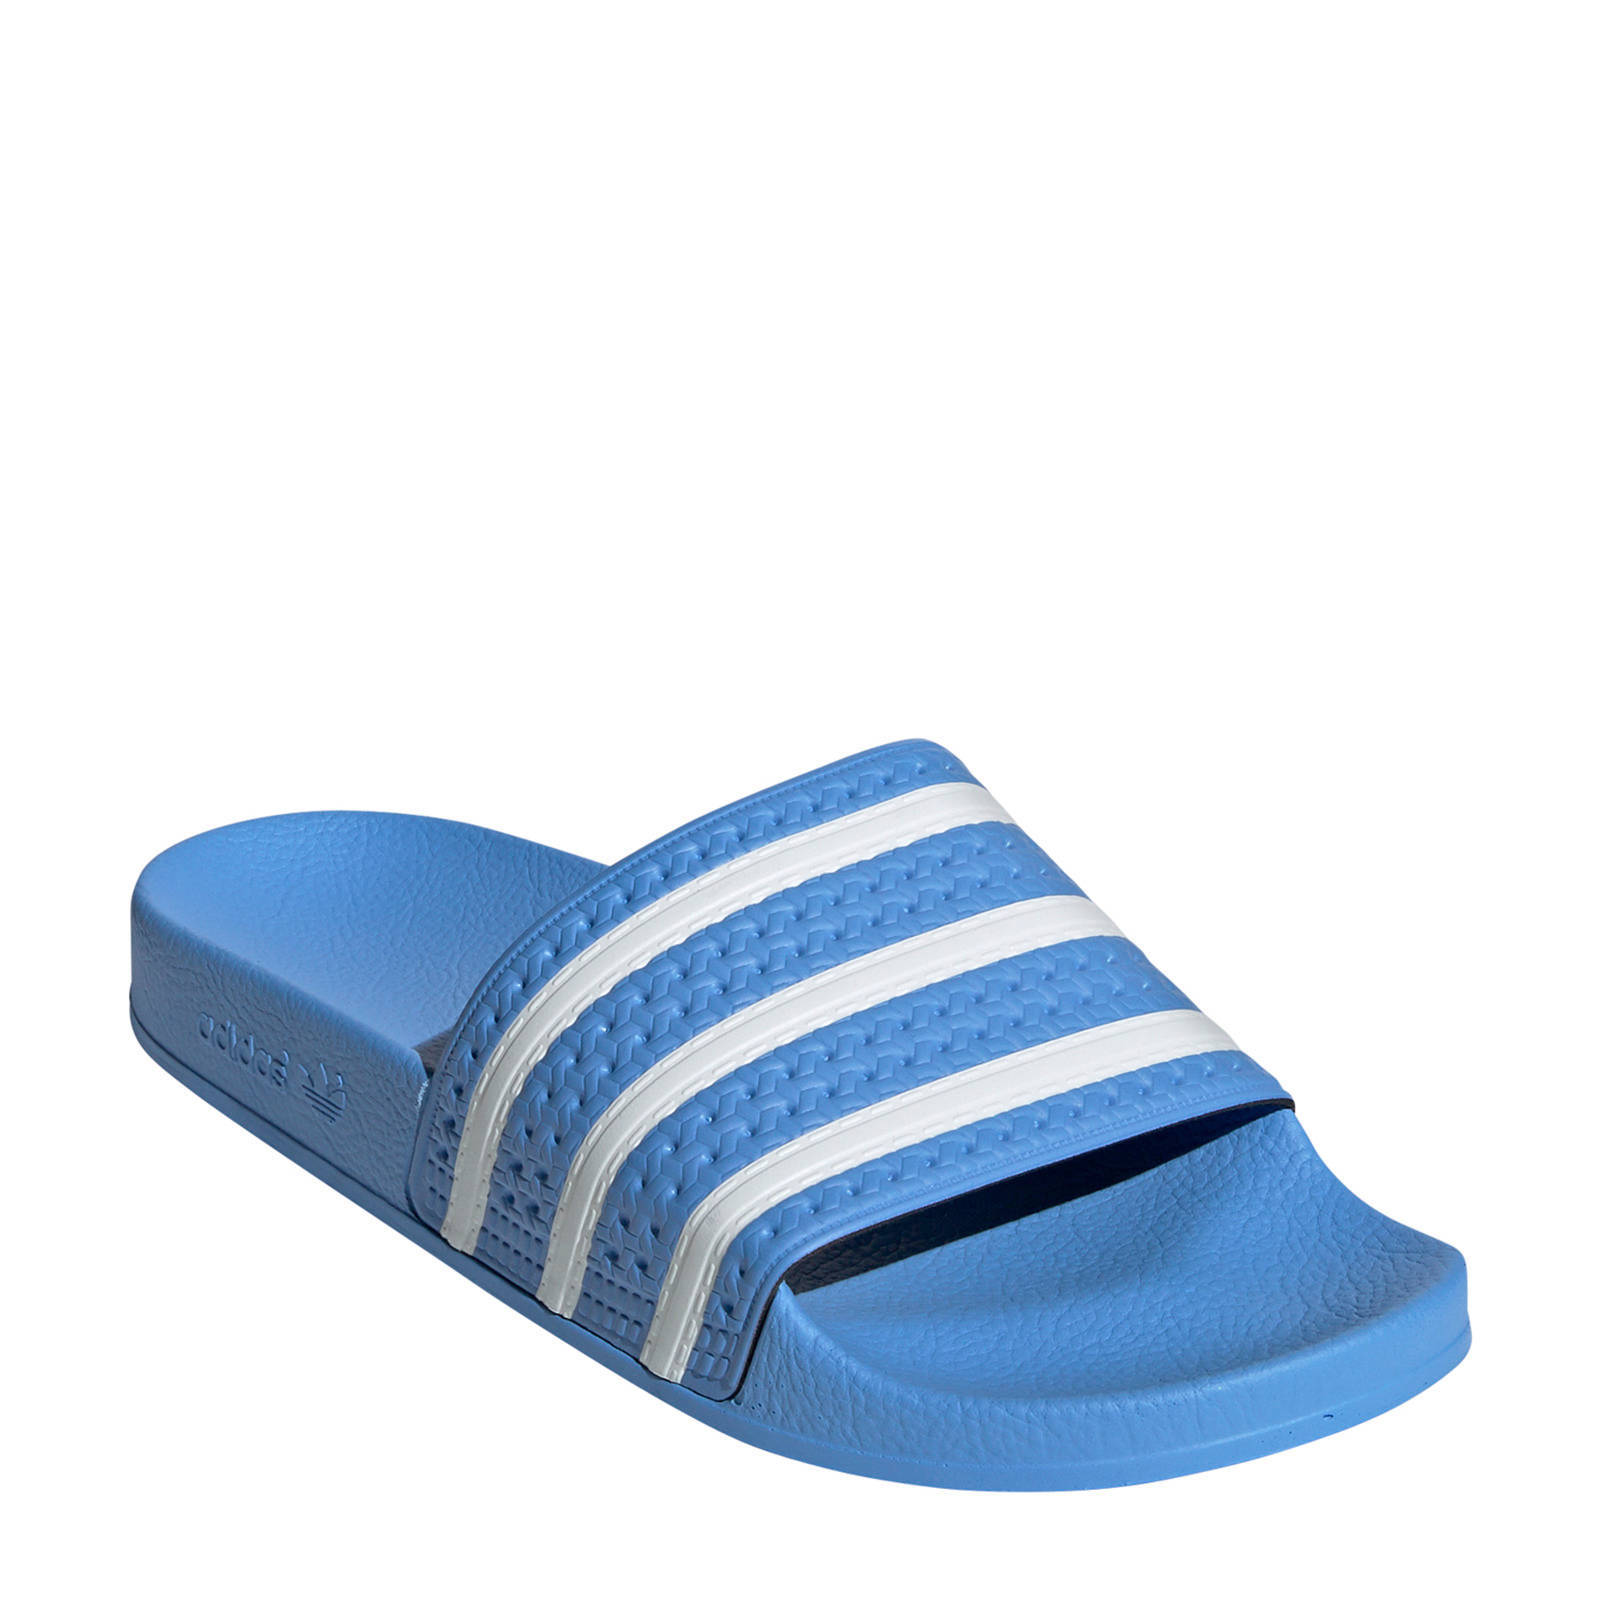 adidas slippers geel blauw cheap online